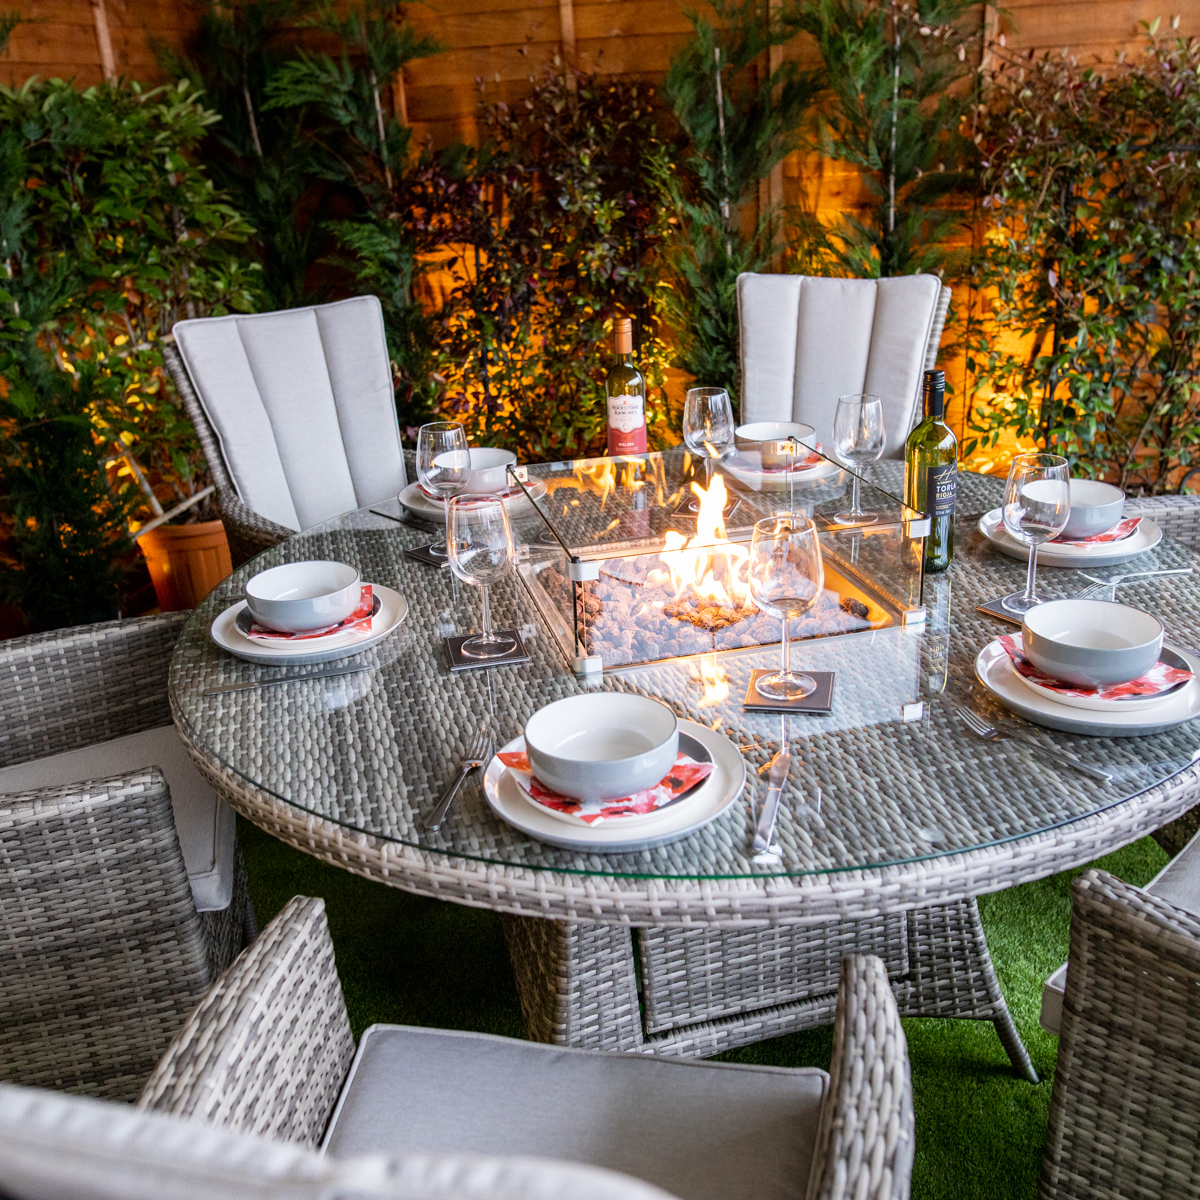 Where do you keep garden furniture in the winter?